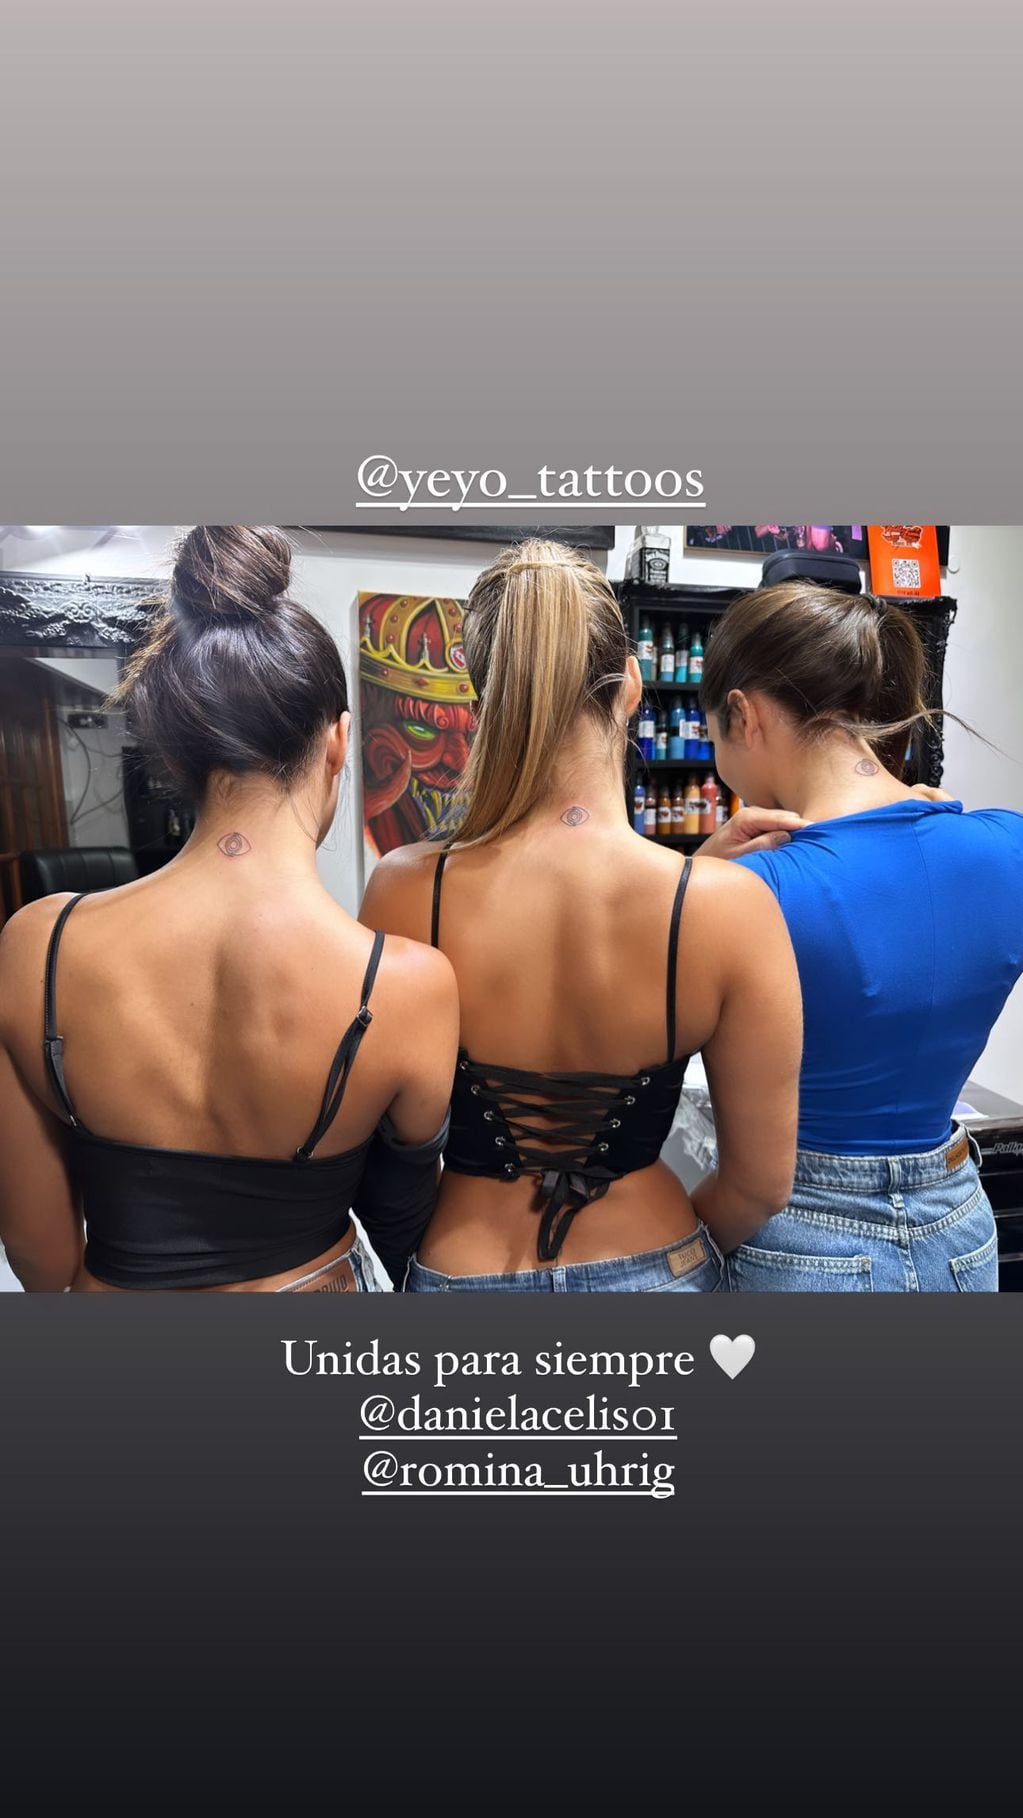 El tatuaje de Julieta Poggio, Daniela Celis y Romina Uhrig